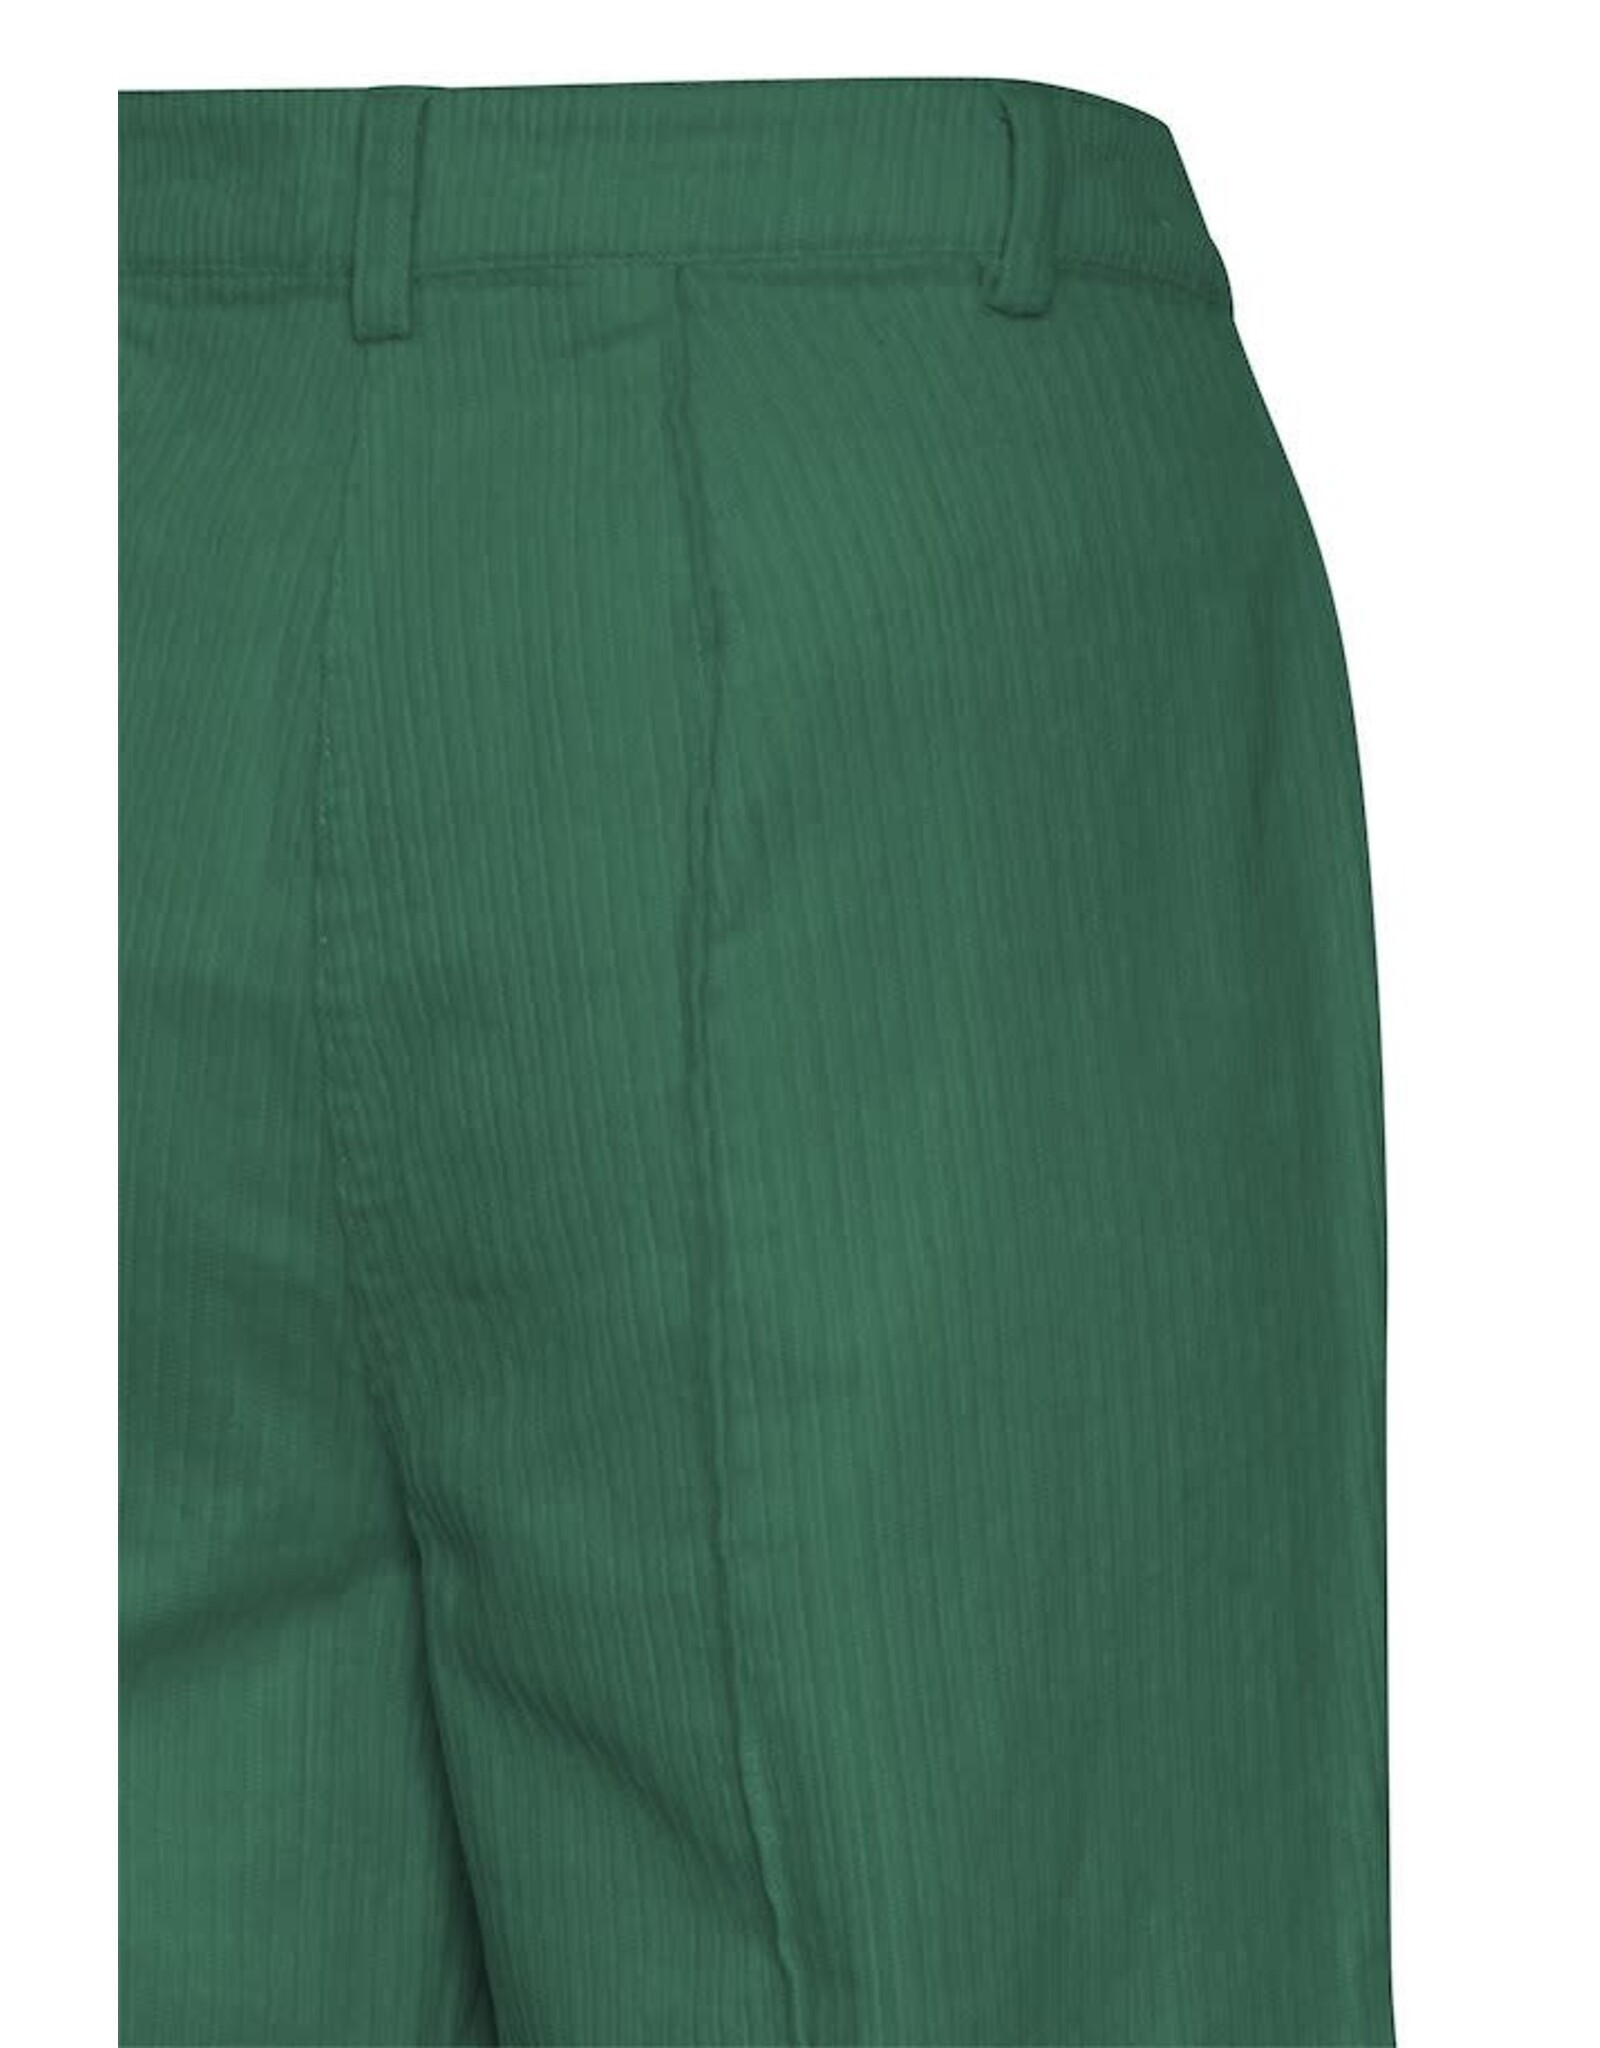 b.young b.young - Disune pants (cadmium green)